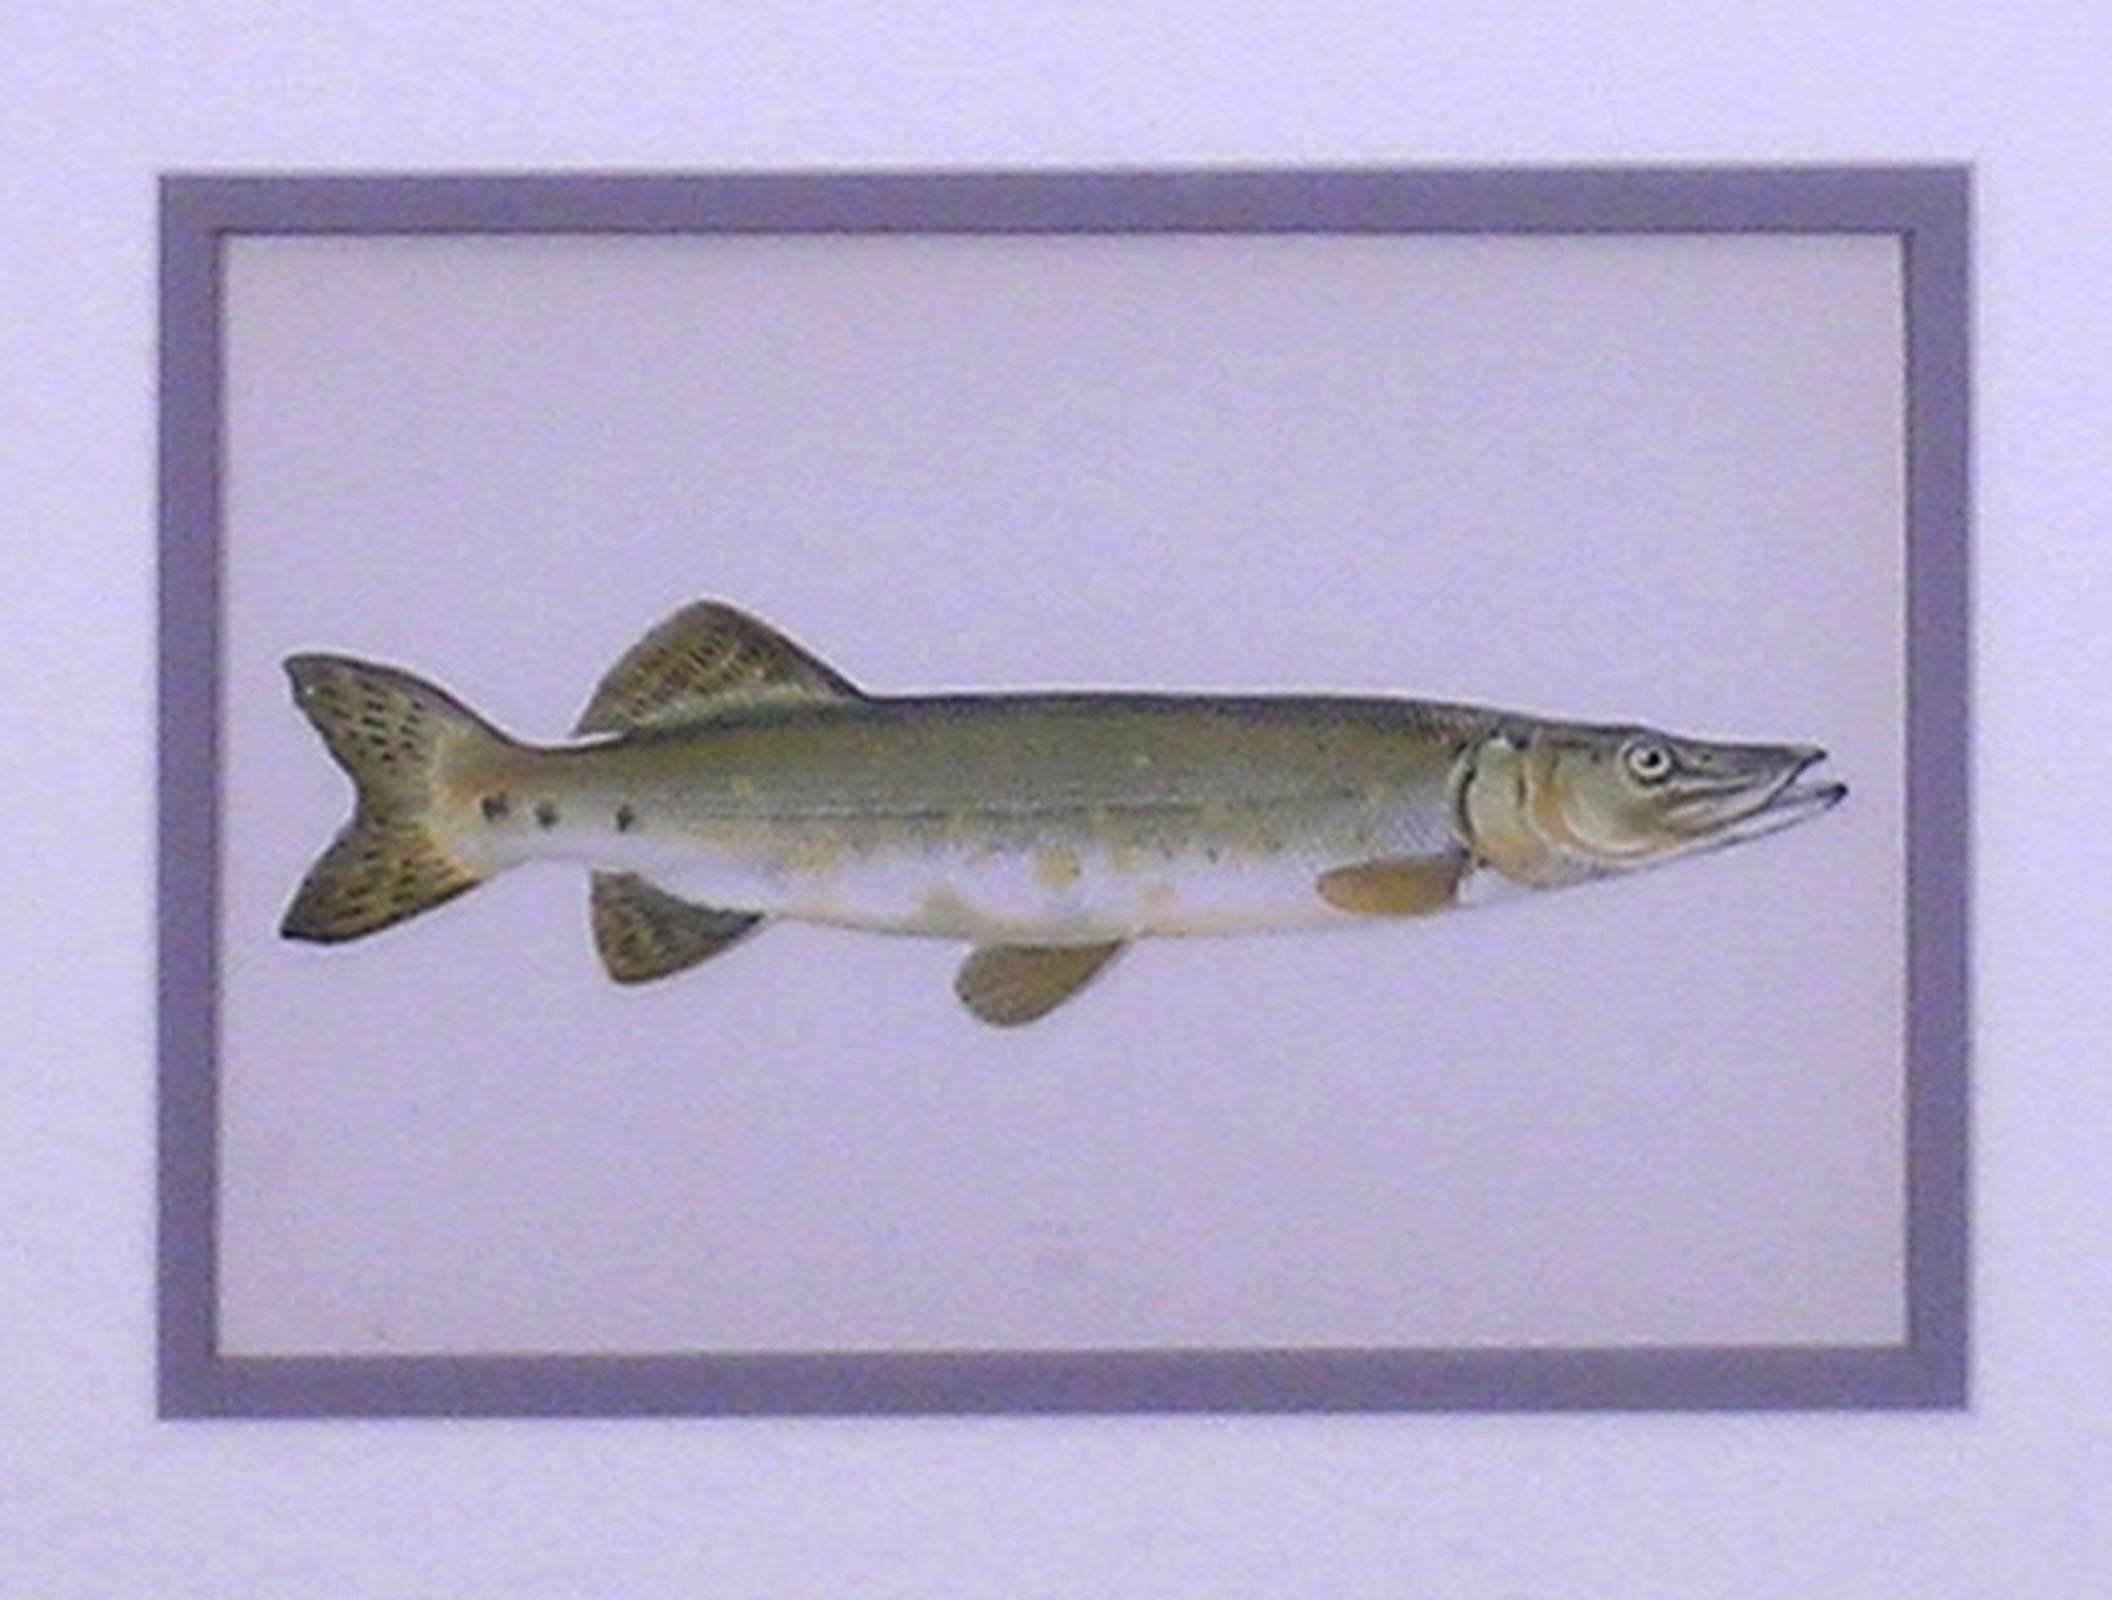 edward trout